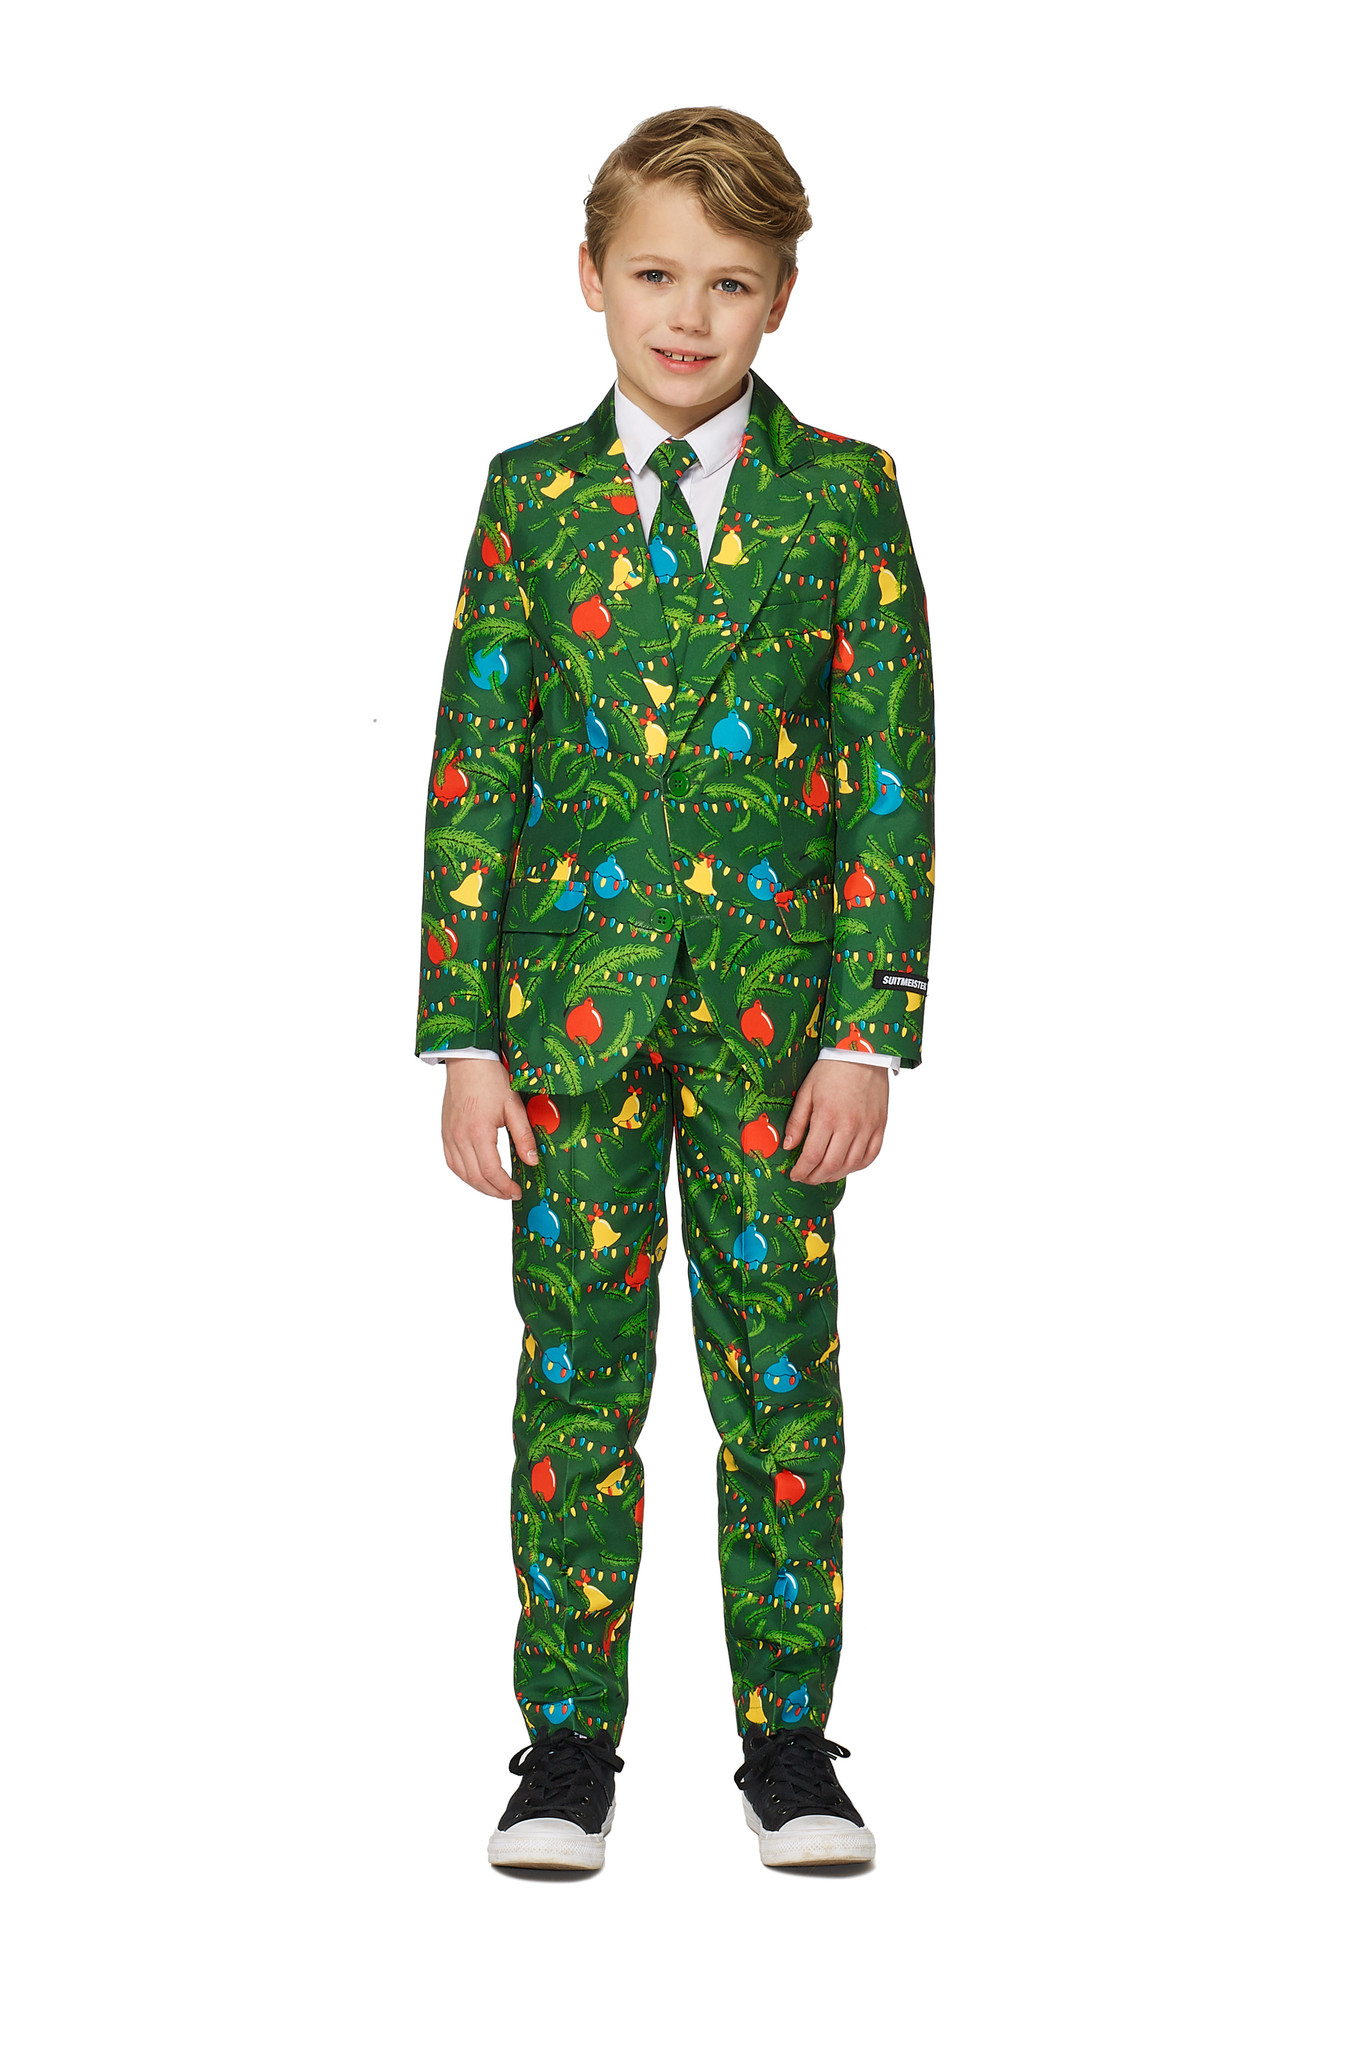 Suitmeister Christmas Green Tree Light Up - Kids Pak - Kerst Outfit met lichtjes - Groen - Maat S